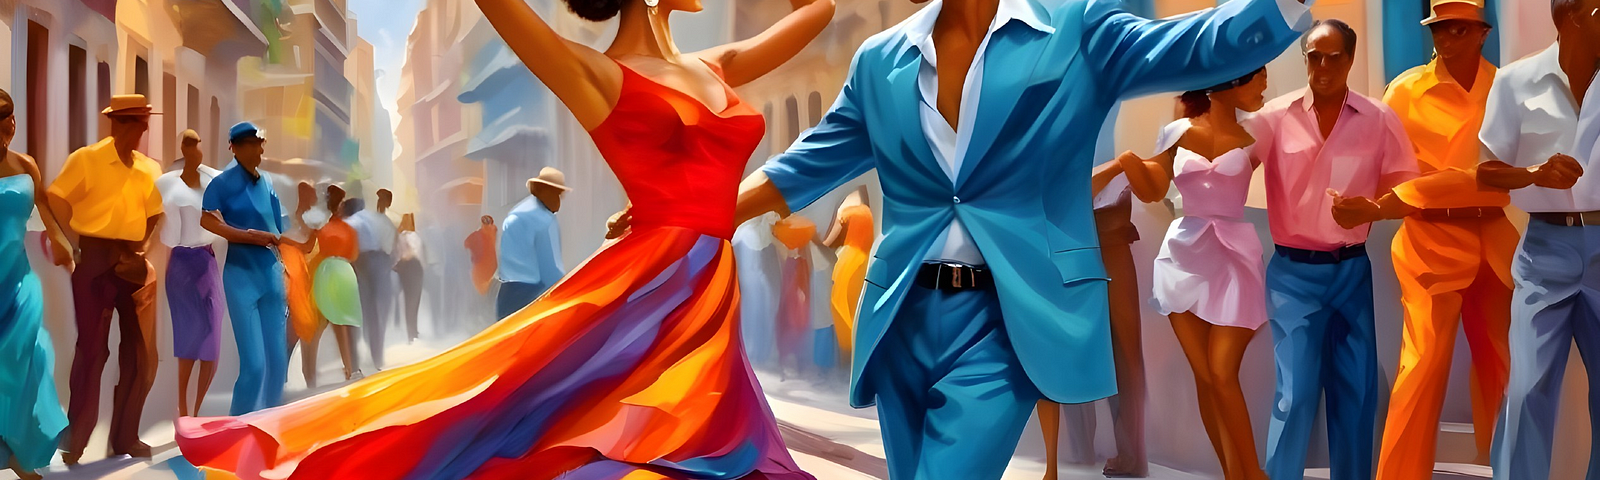 Salsa dancing man and woman